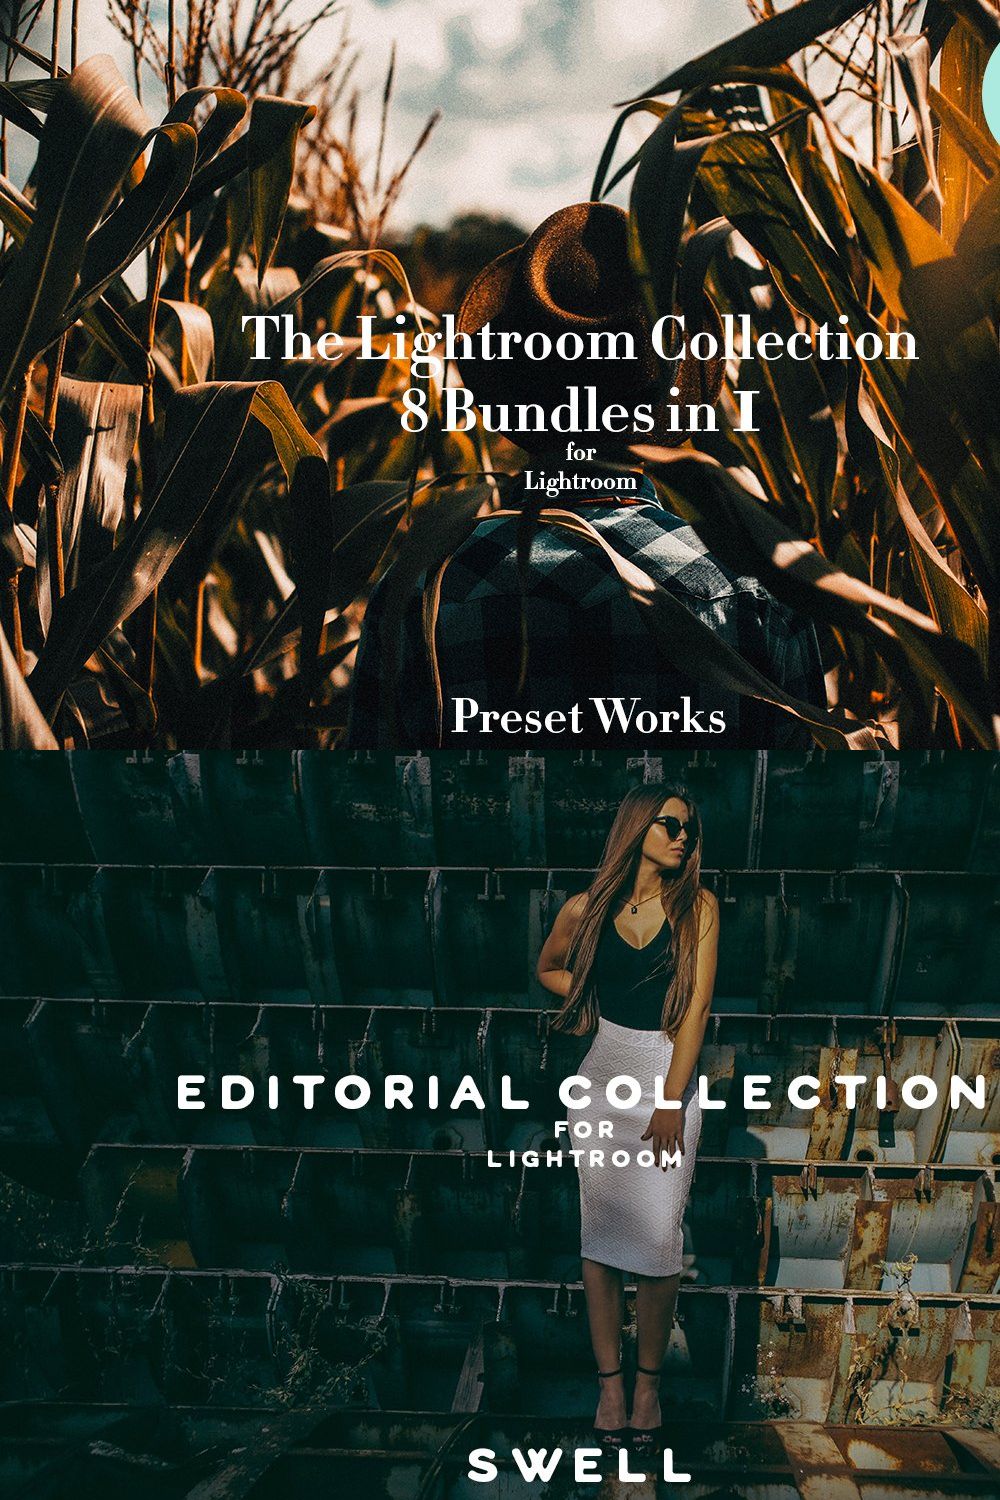 The Lightroom Collection - 8 bundles pinterest preview image.